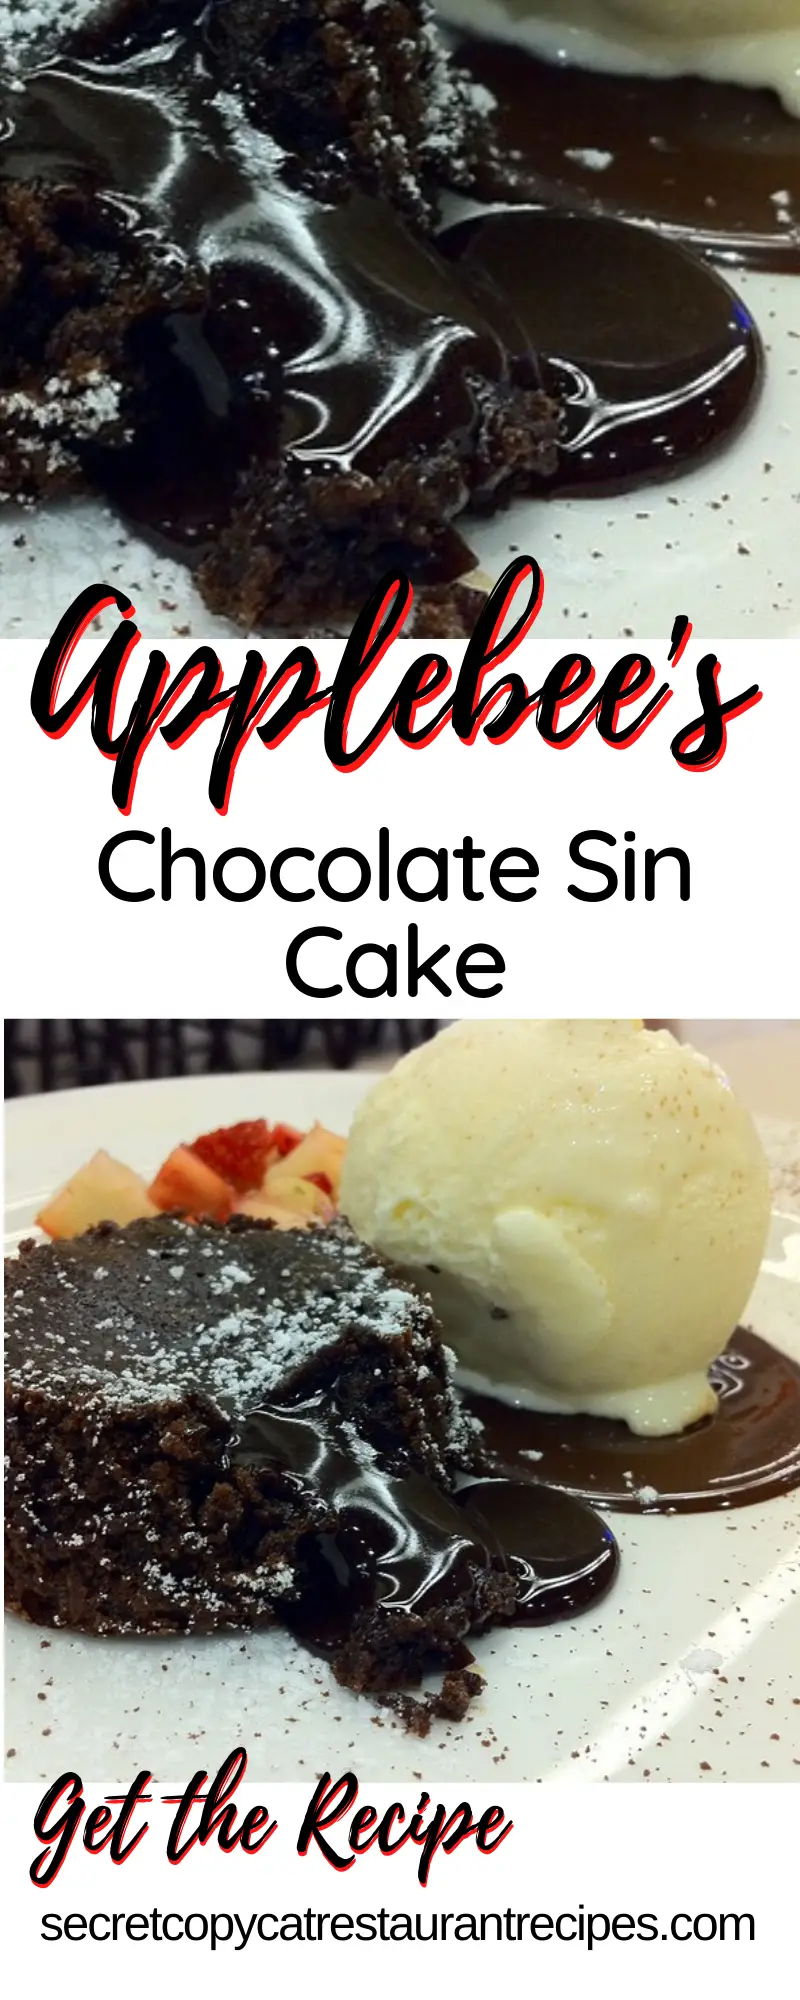 Applebee’s Chocolate Sin Cake Recipe